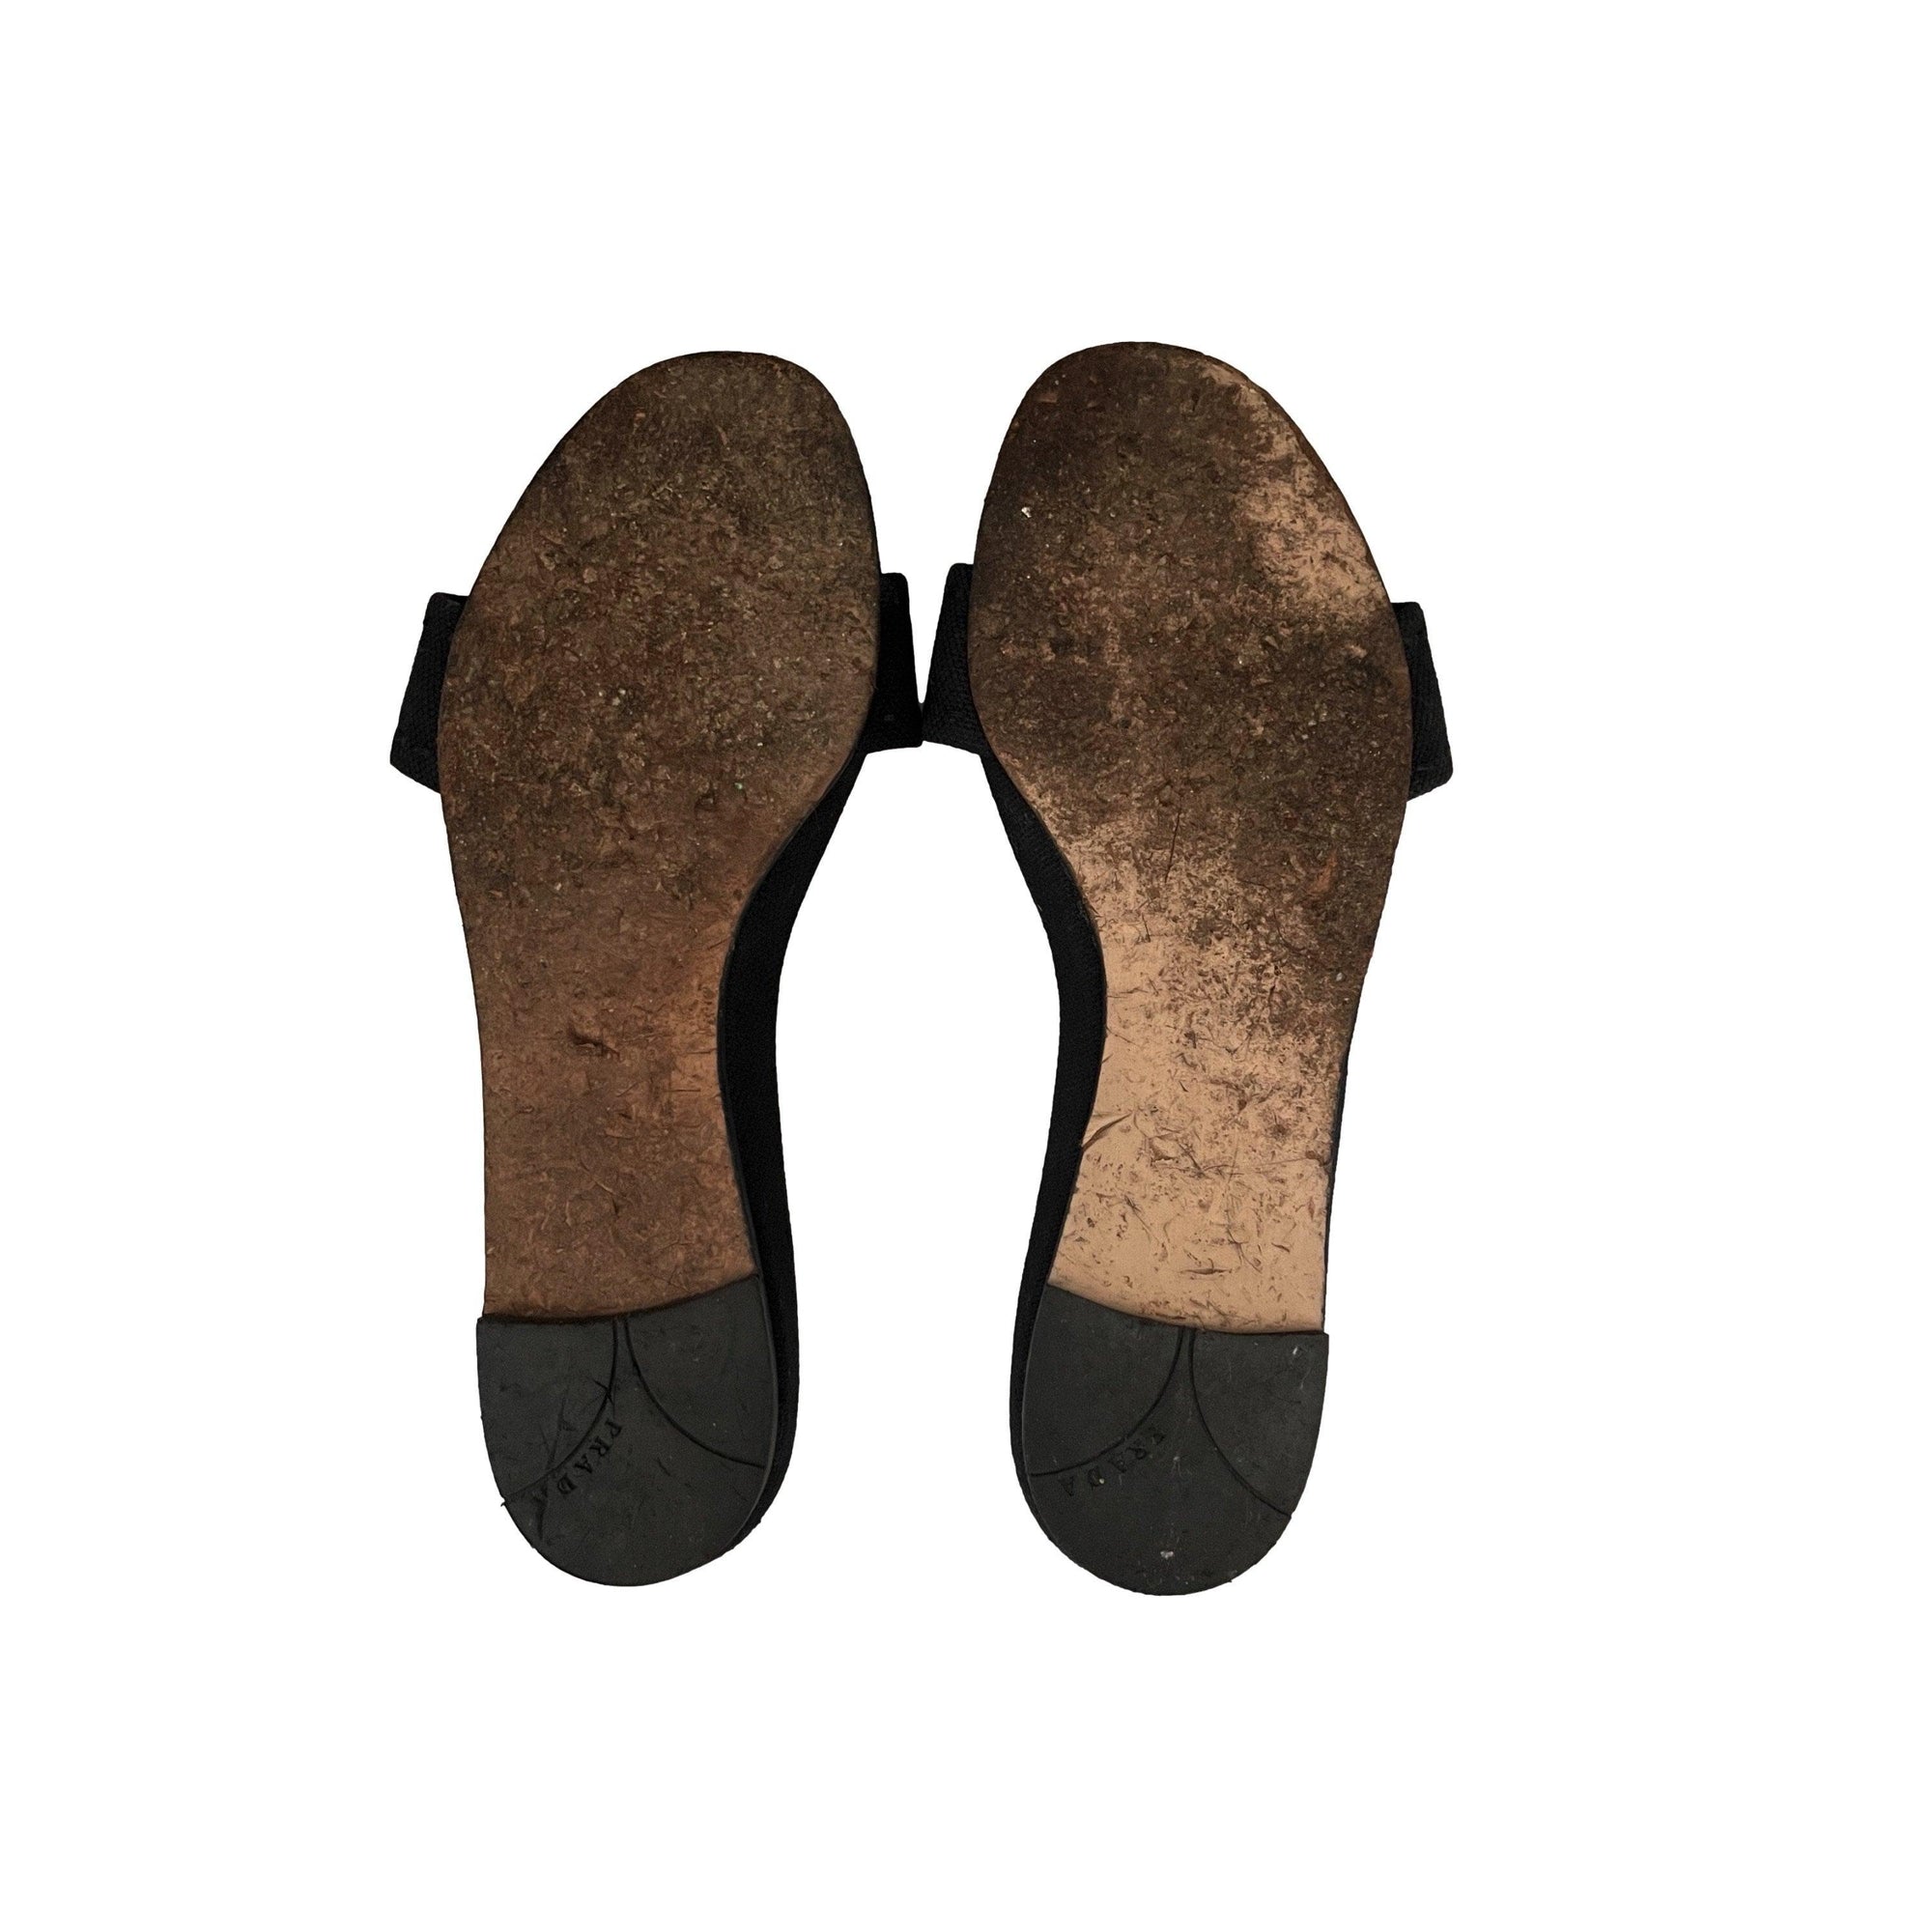 Prada Black Logo Slides - Shoes